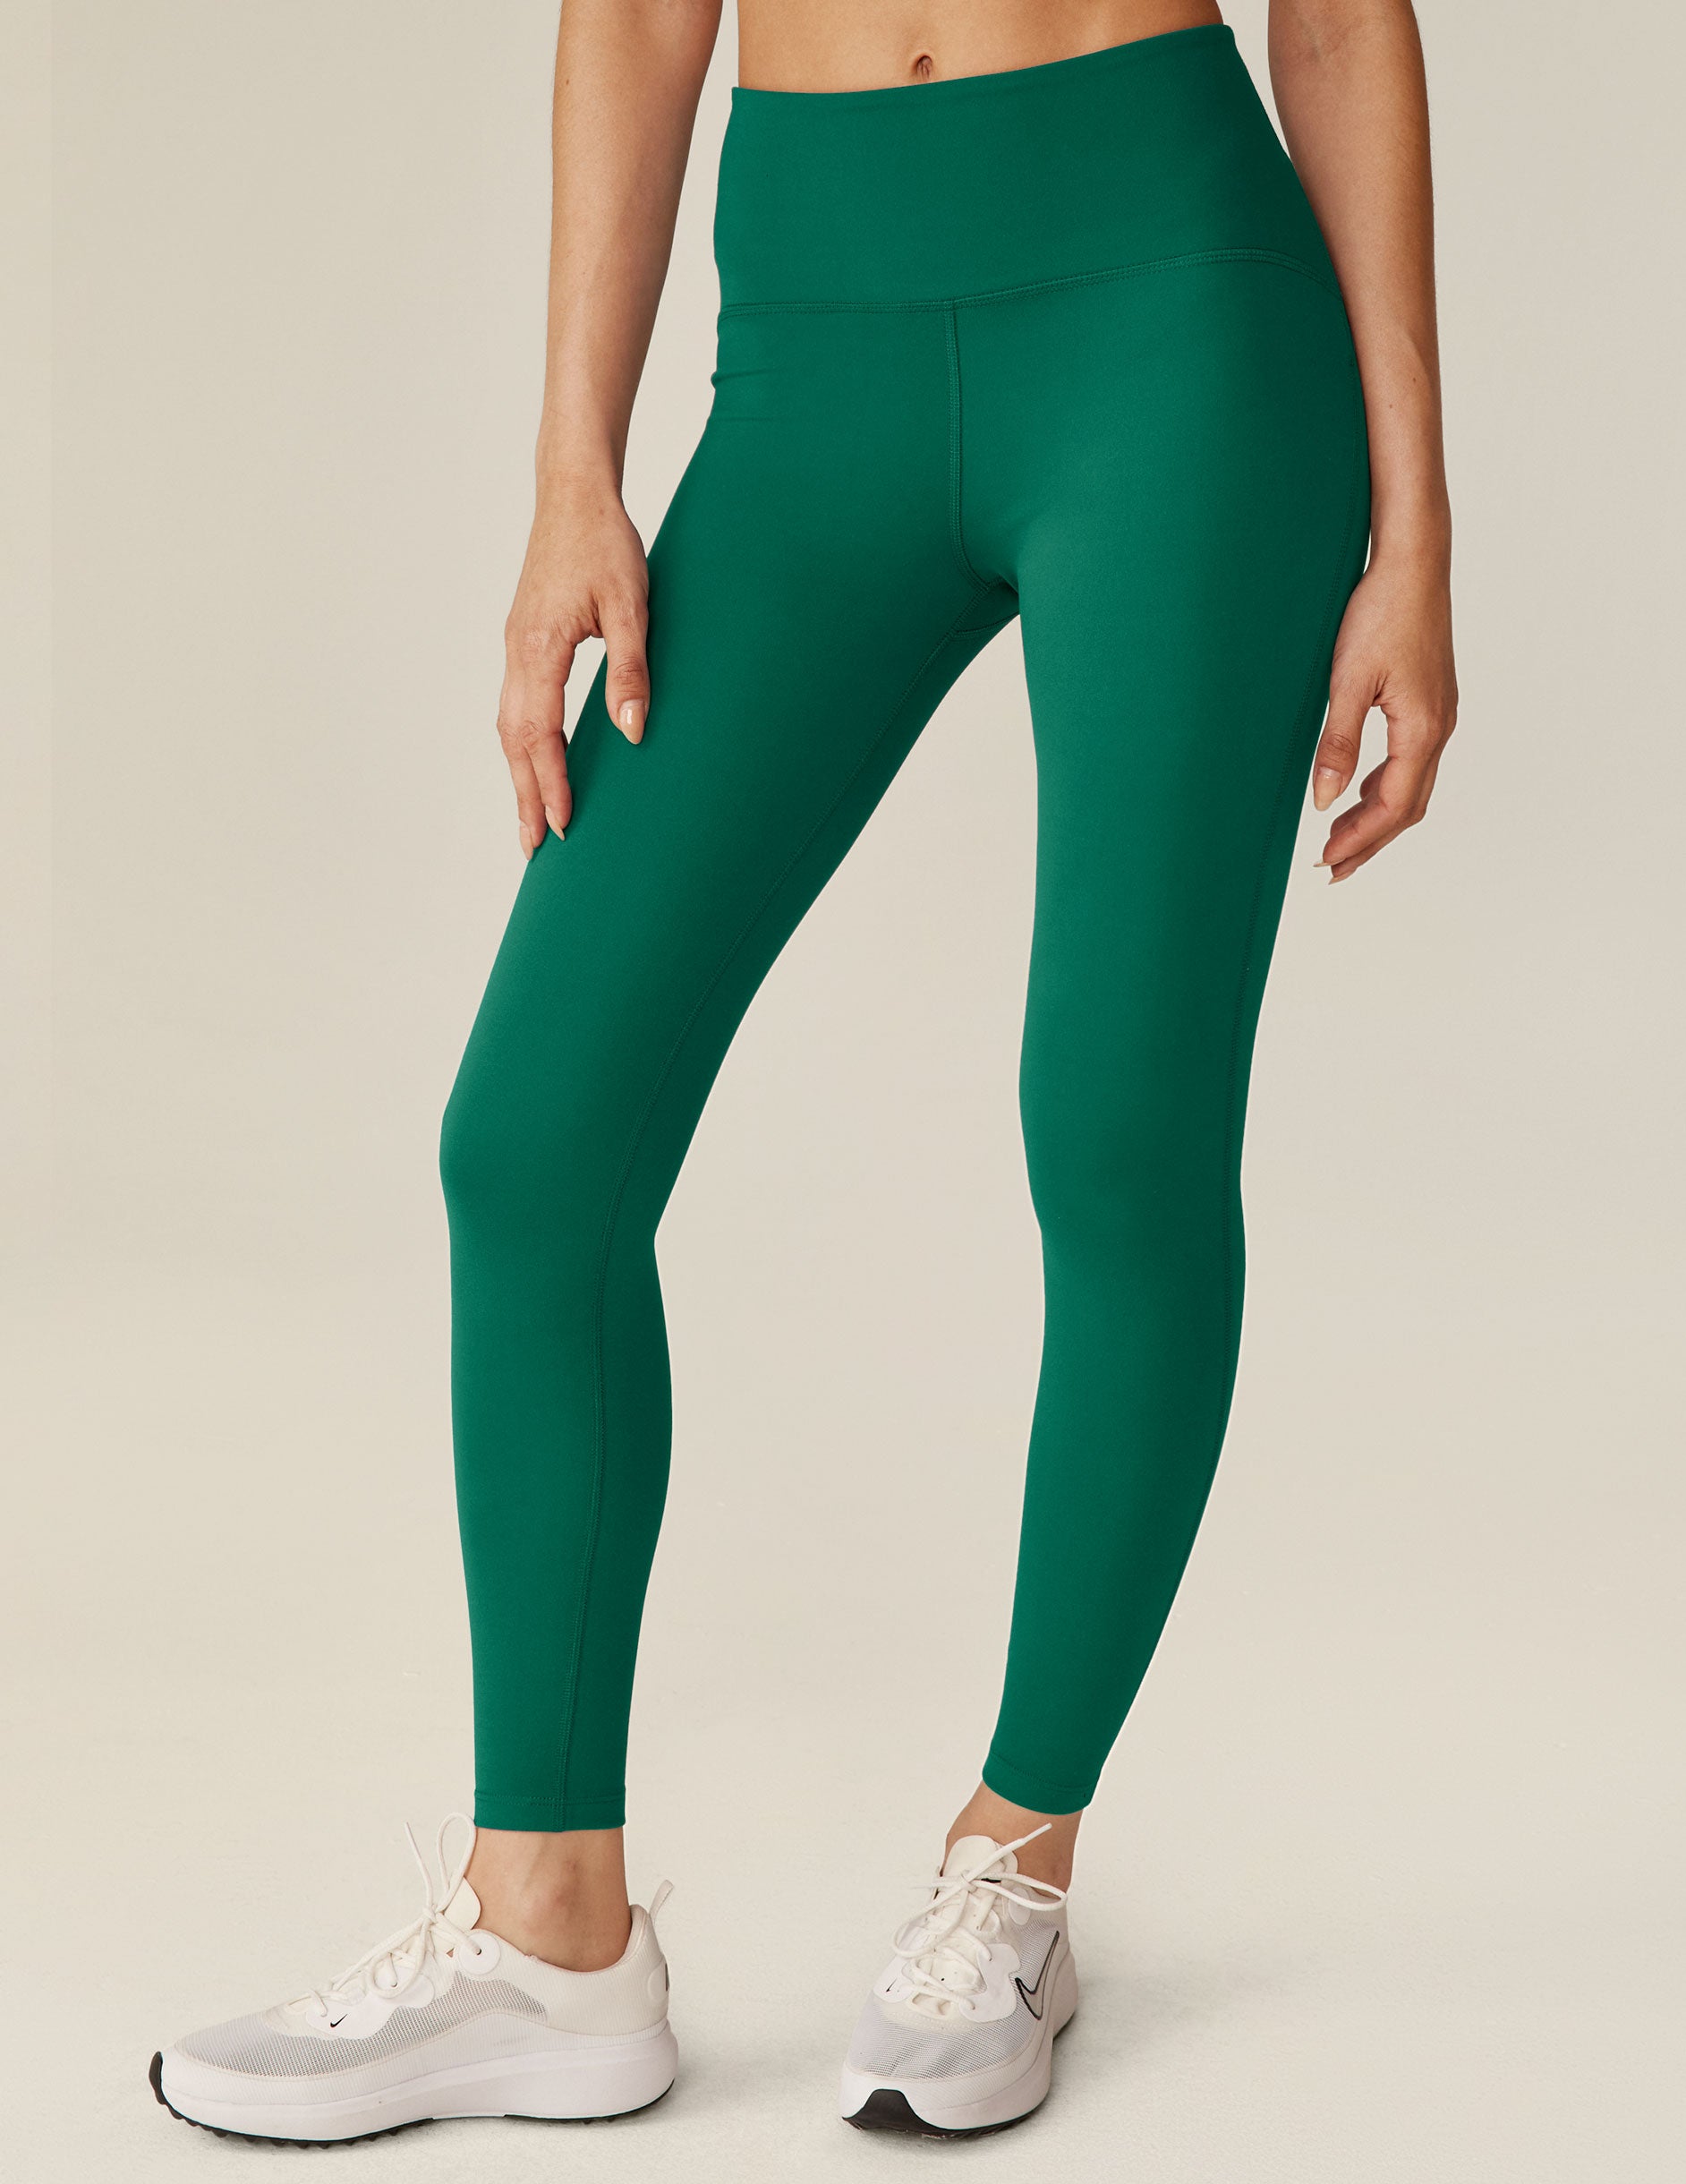 green 4" waistband midi leggings. 